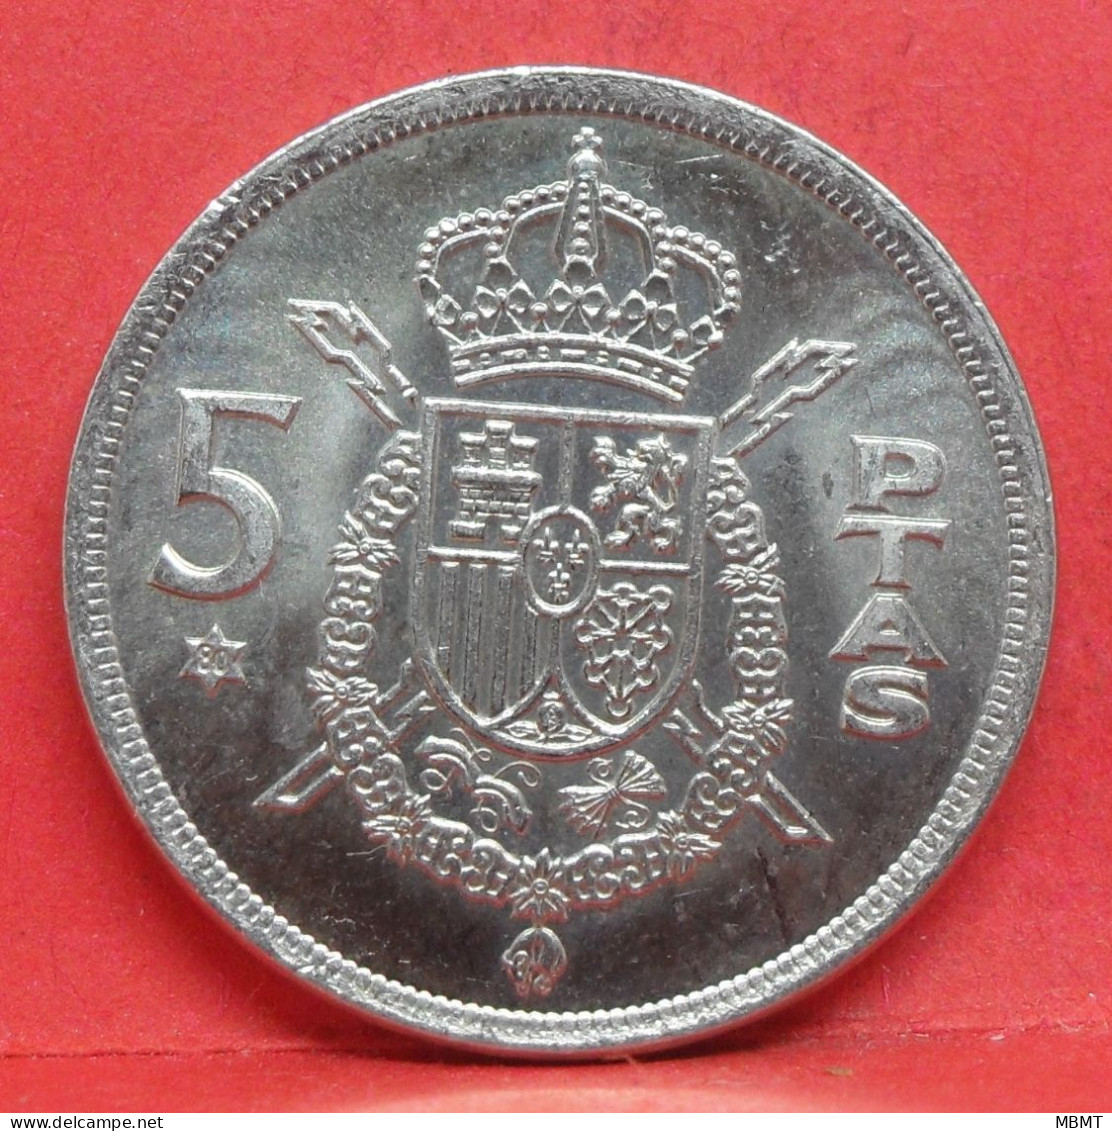 5 Pesetas 1975 étoile 80 - SPL - Pièce Monnaie Espagne - Article N°2379 - 5 Pesetas